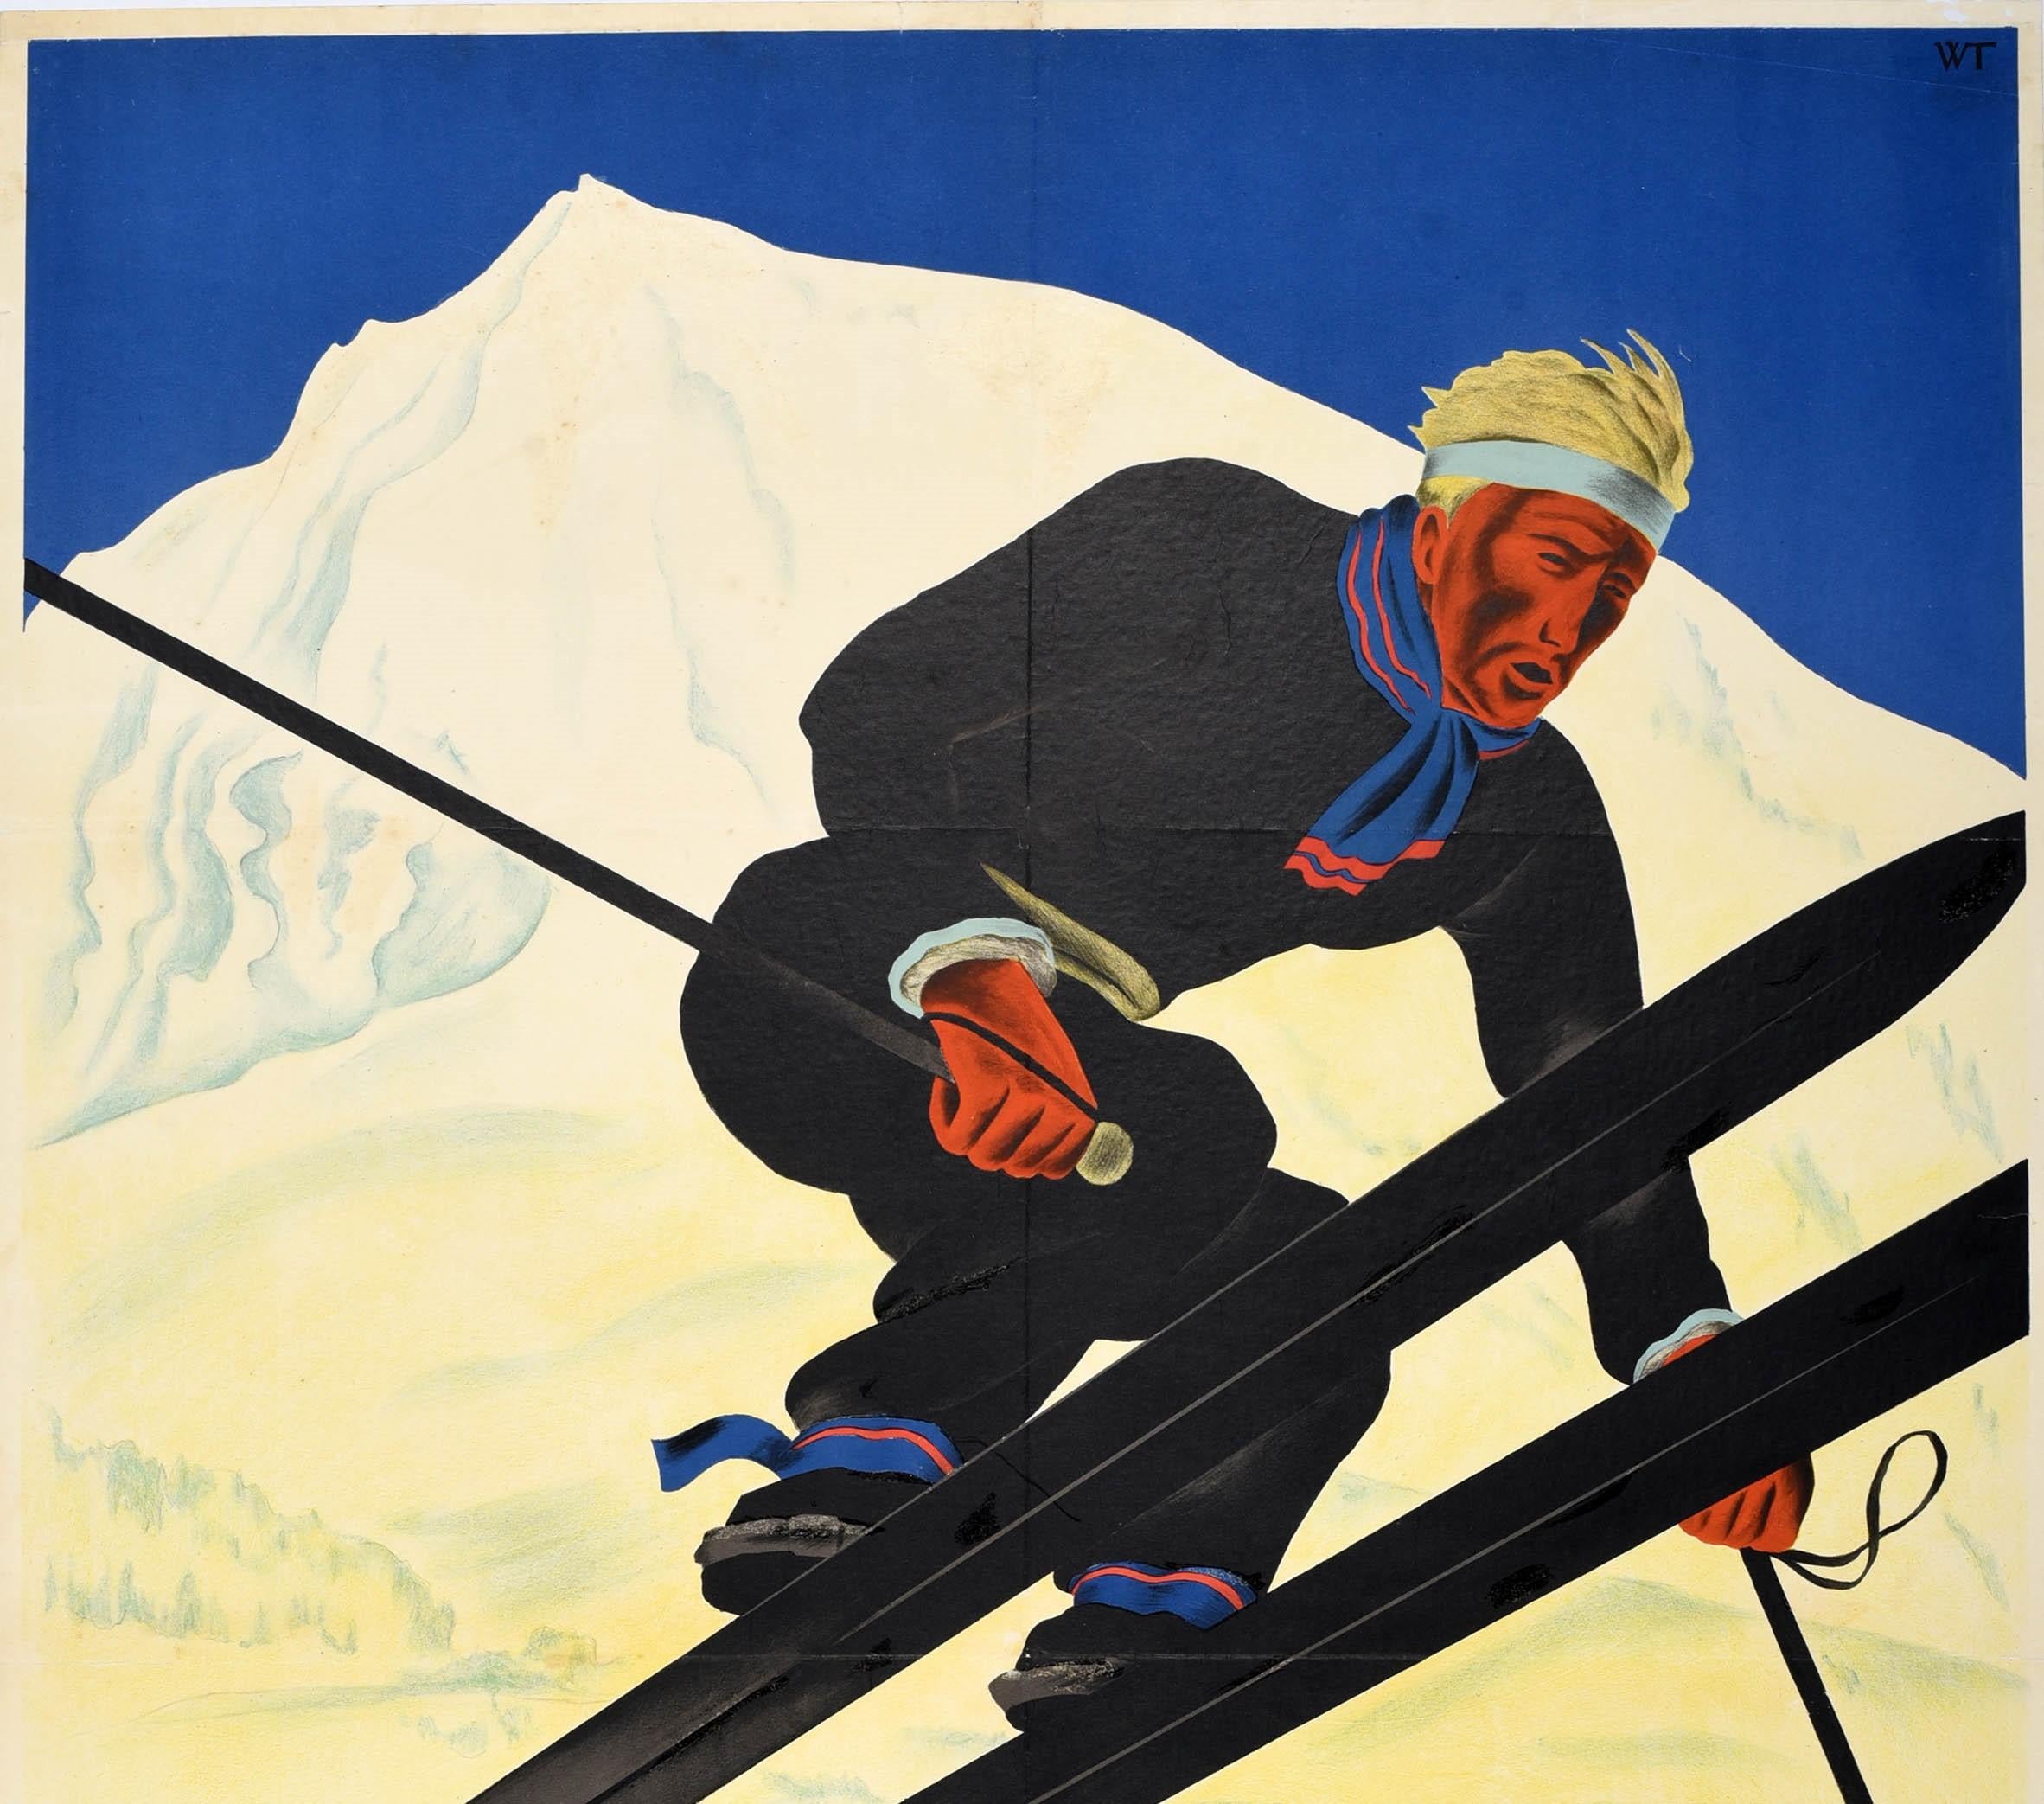 Original Vintage Swiss Skiing Poster Adelboden Switzerland Ski Jump Winter Sport - Print by Willy Trapp